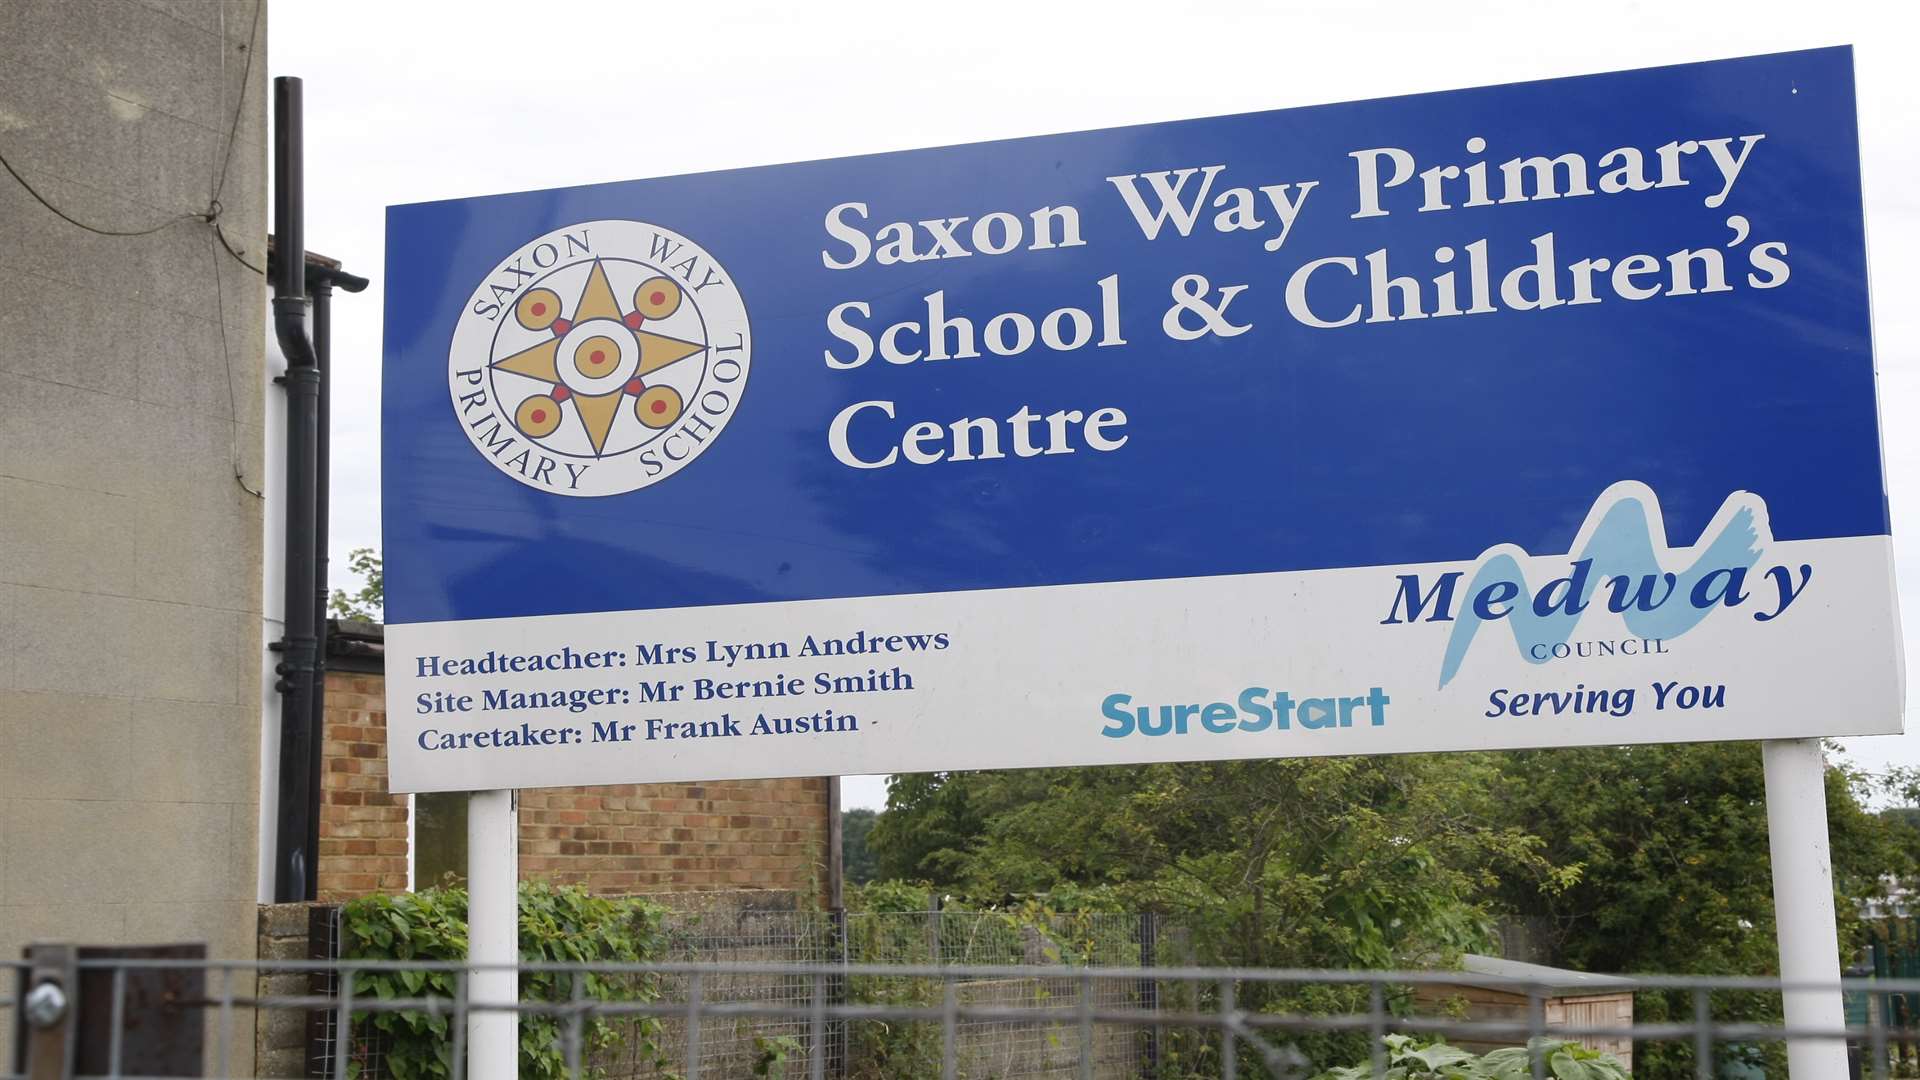 Saxon Way Primary School, Church Path, Gillingham, requires improvement